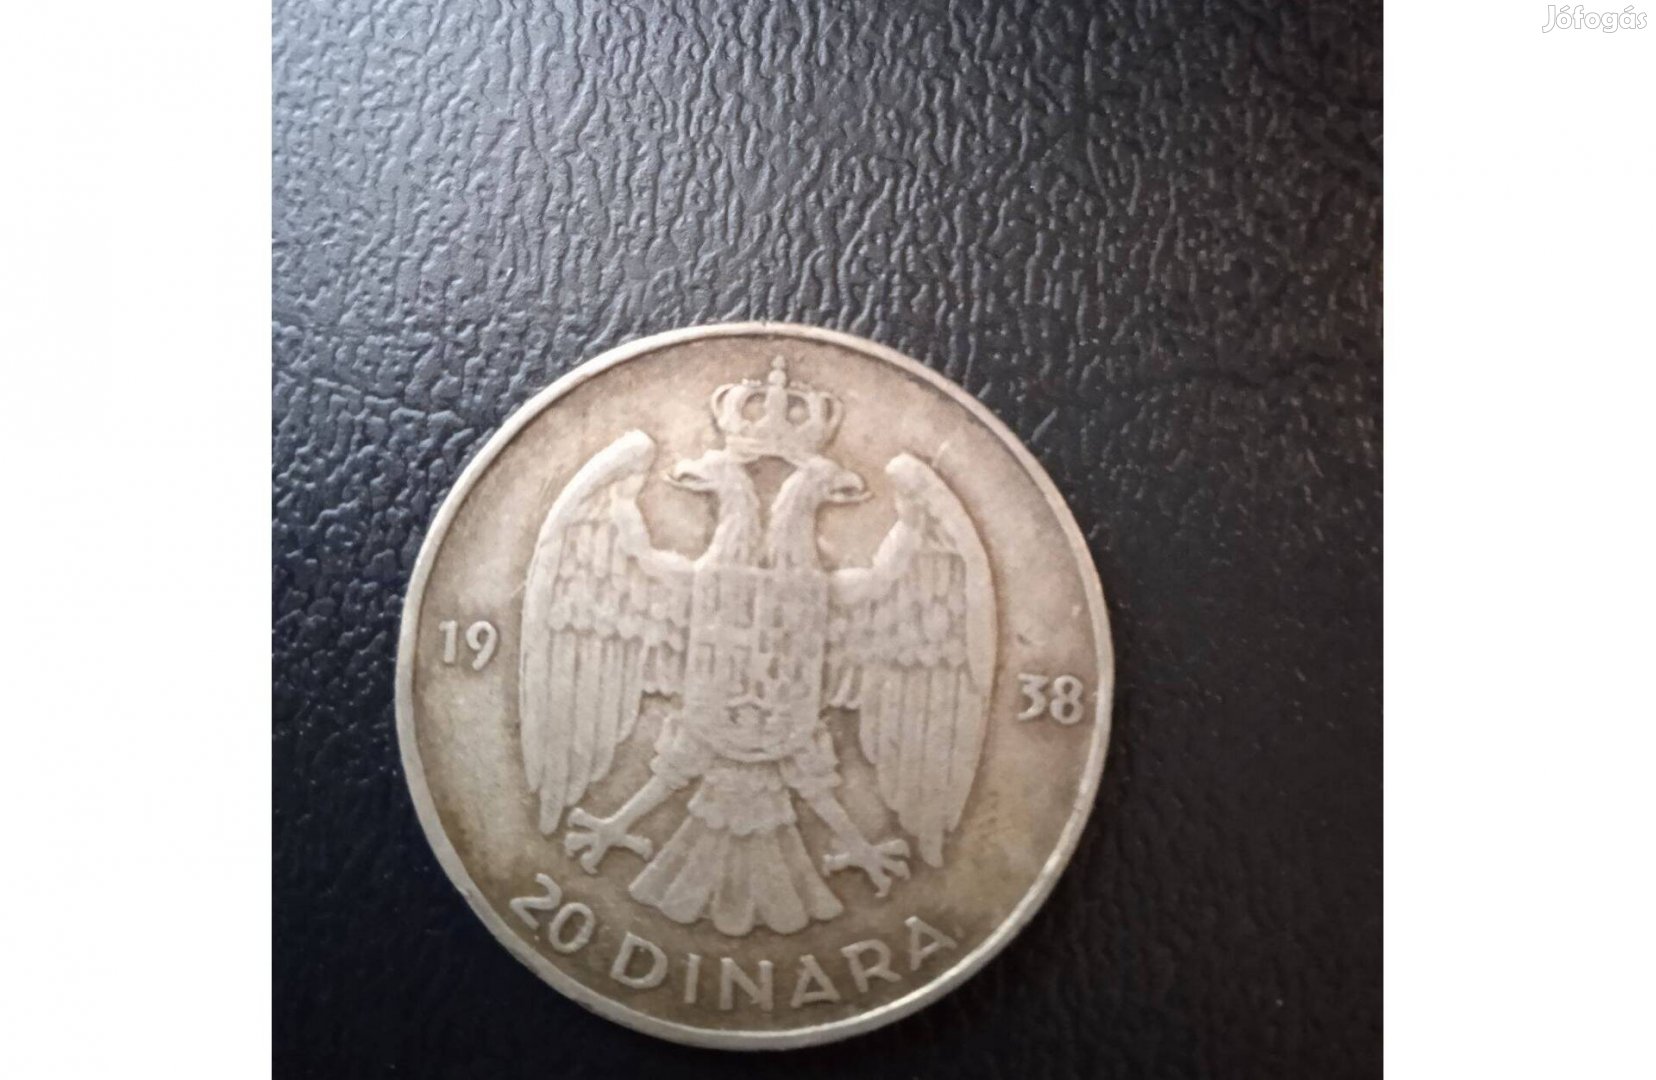 20 Dinar ezüst 1938 II.Petar